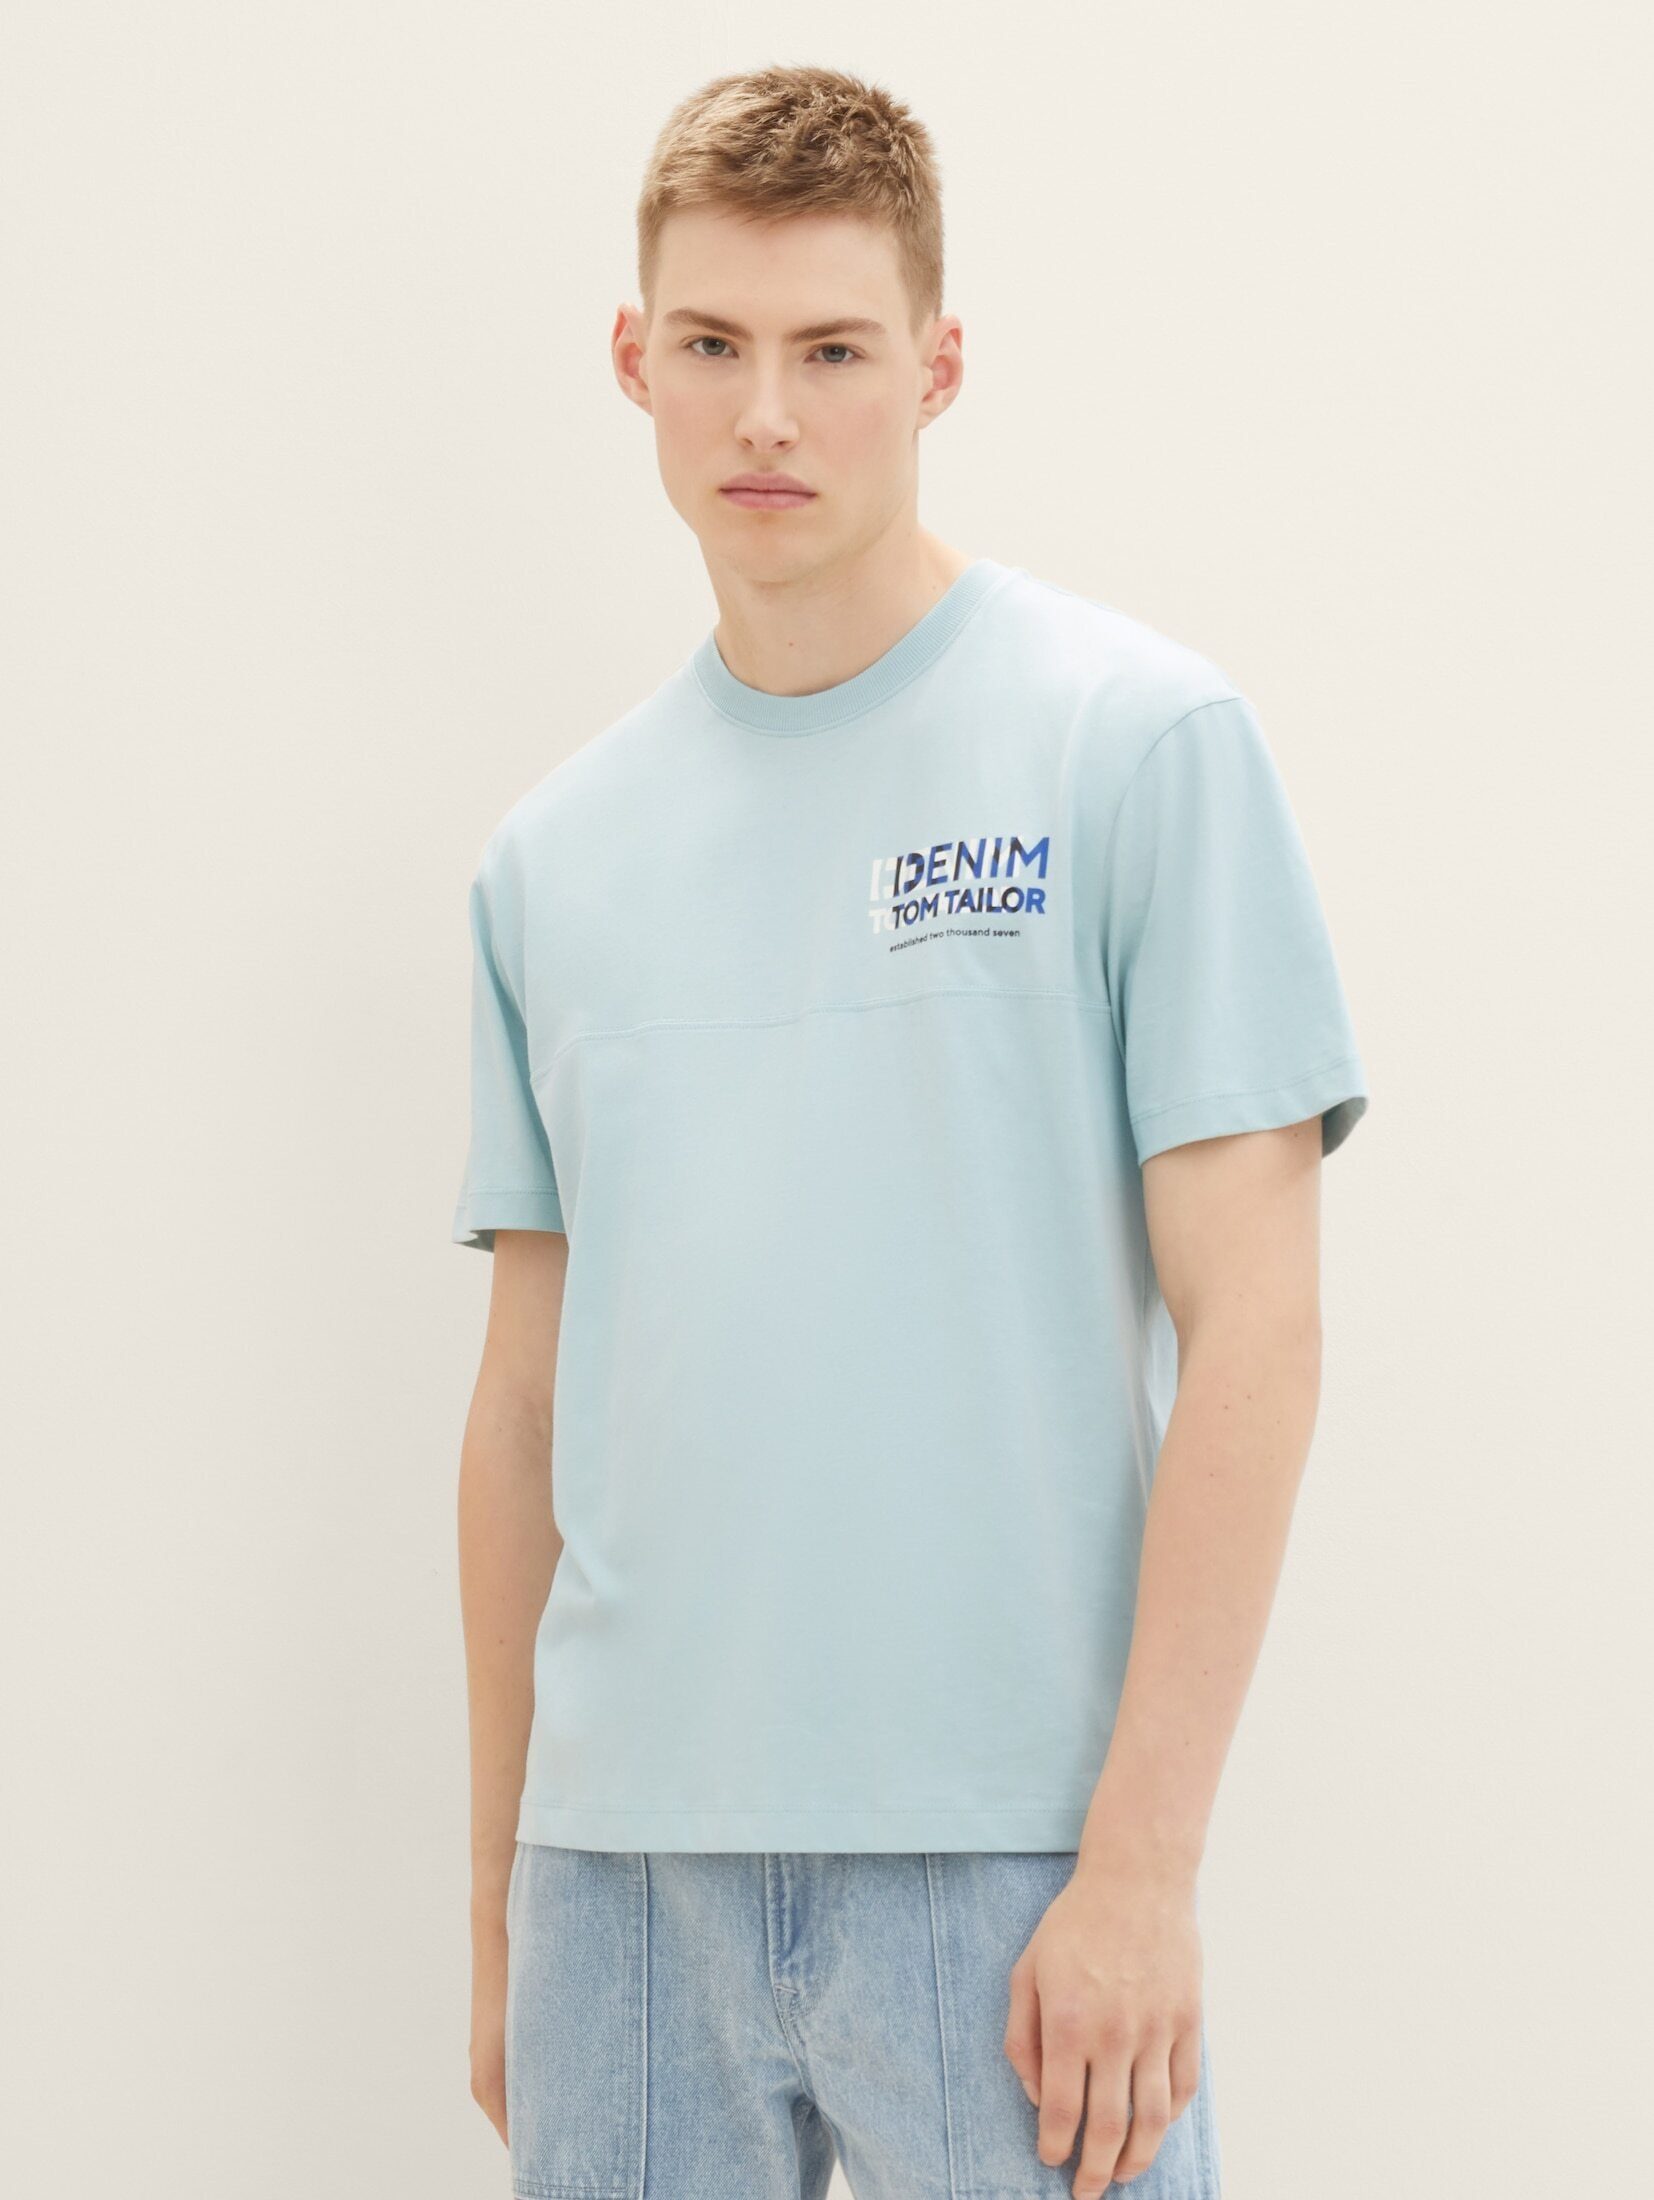 TOM TAILOR Denim T-Shirt T-Shirt mit Bio-Baumwolle dusty mint blue